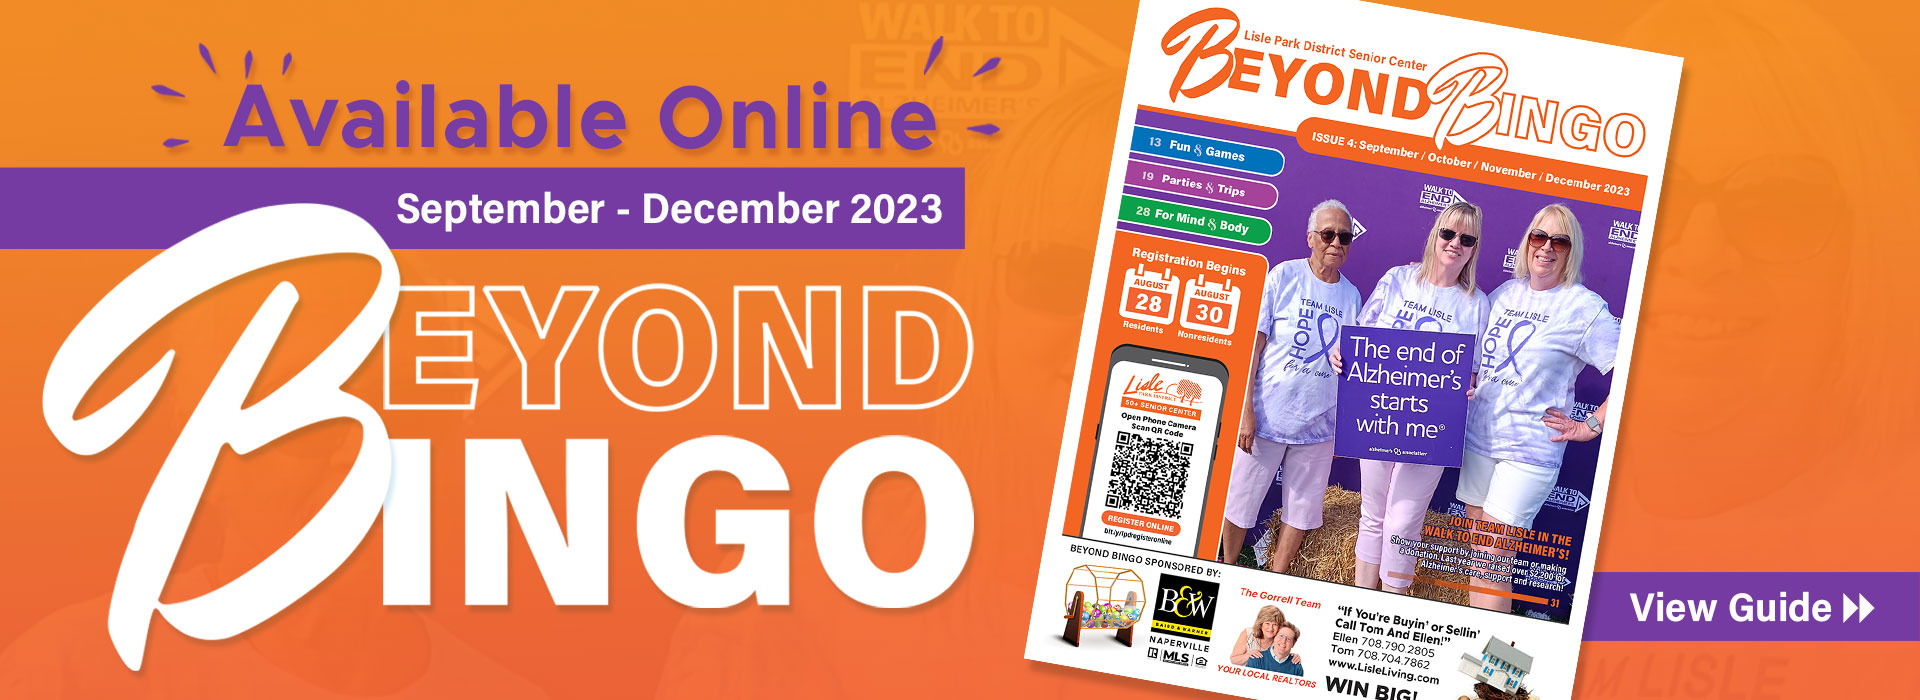 50+ Beyond Bingo November-December 2022 Program Guide